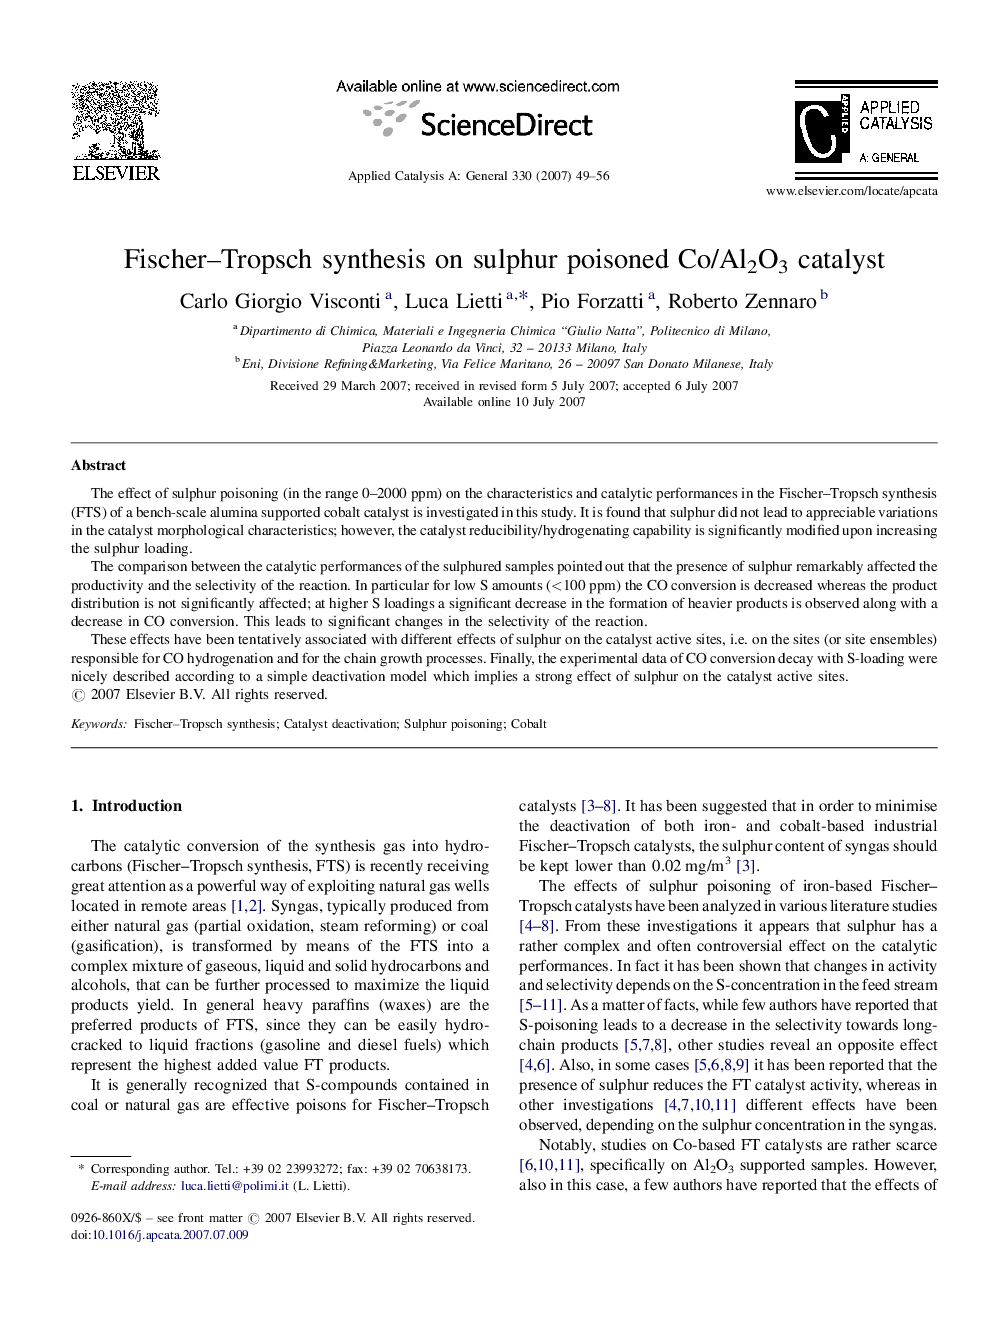 Fischer–Tropsch synthesis on sulphur poisoned Co/Al2O3 catalyst